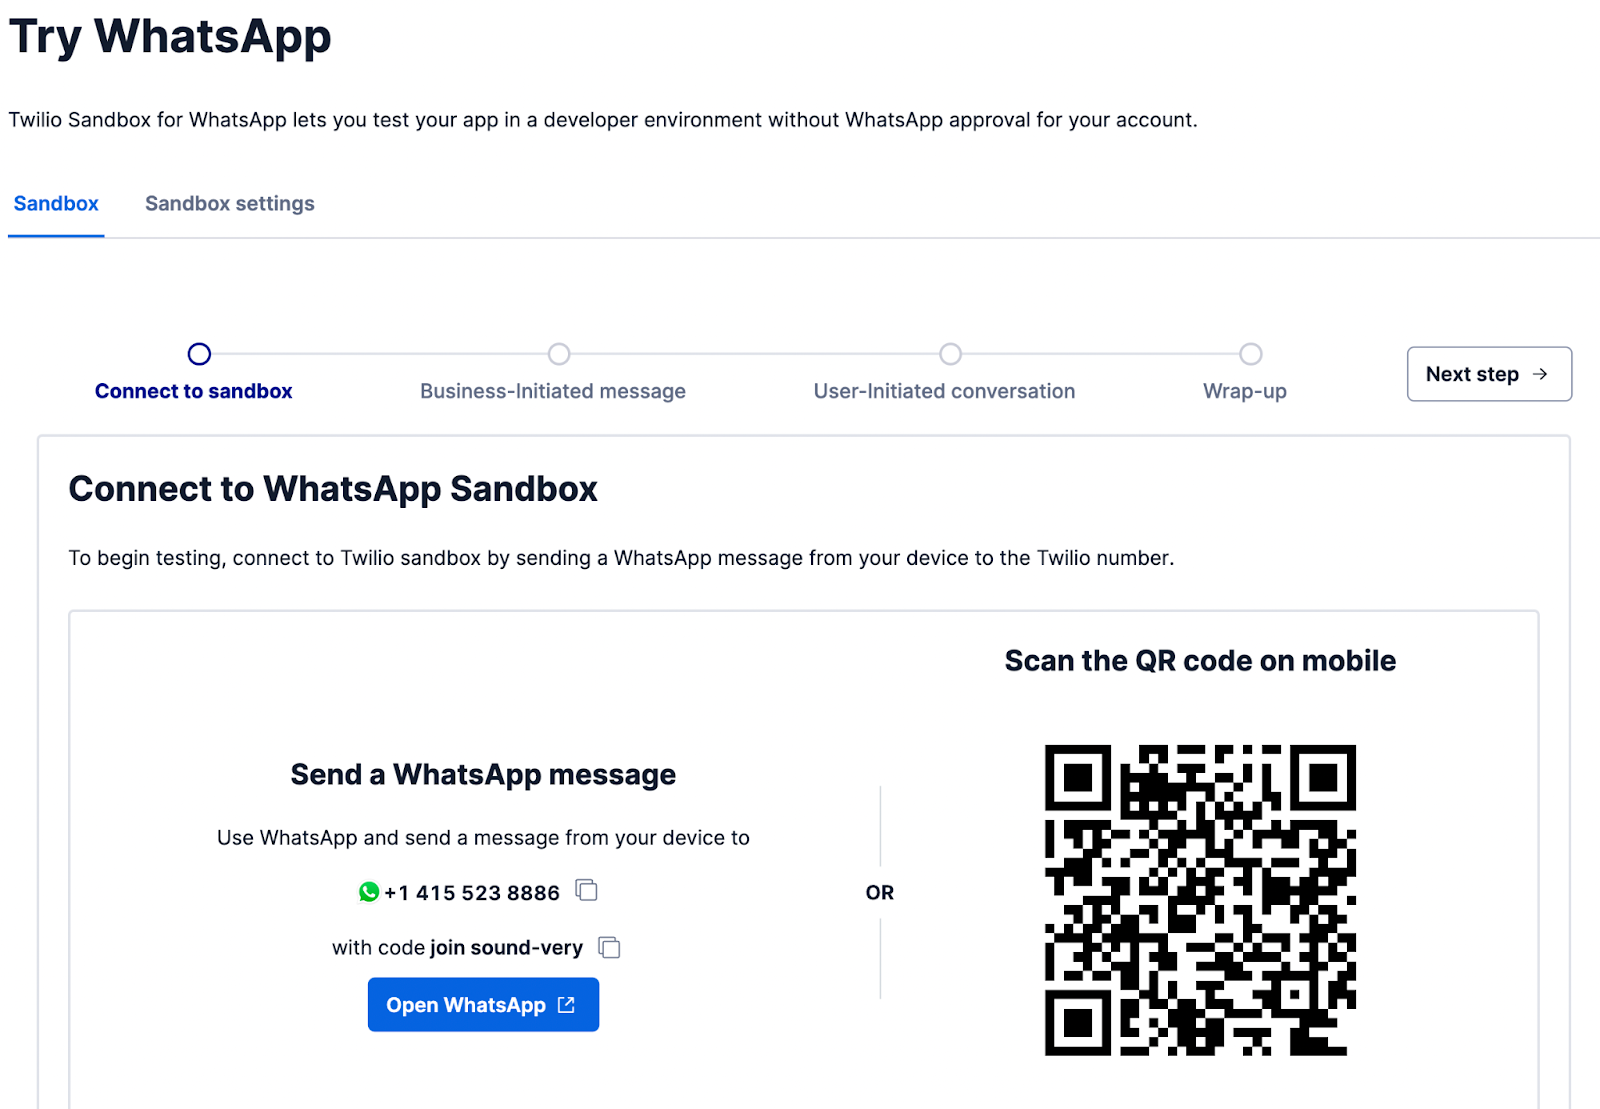 Connect to WhatsApp sandbox